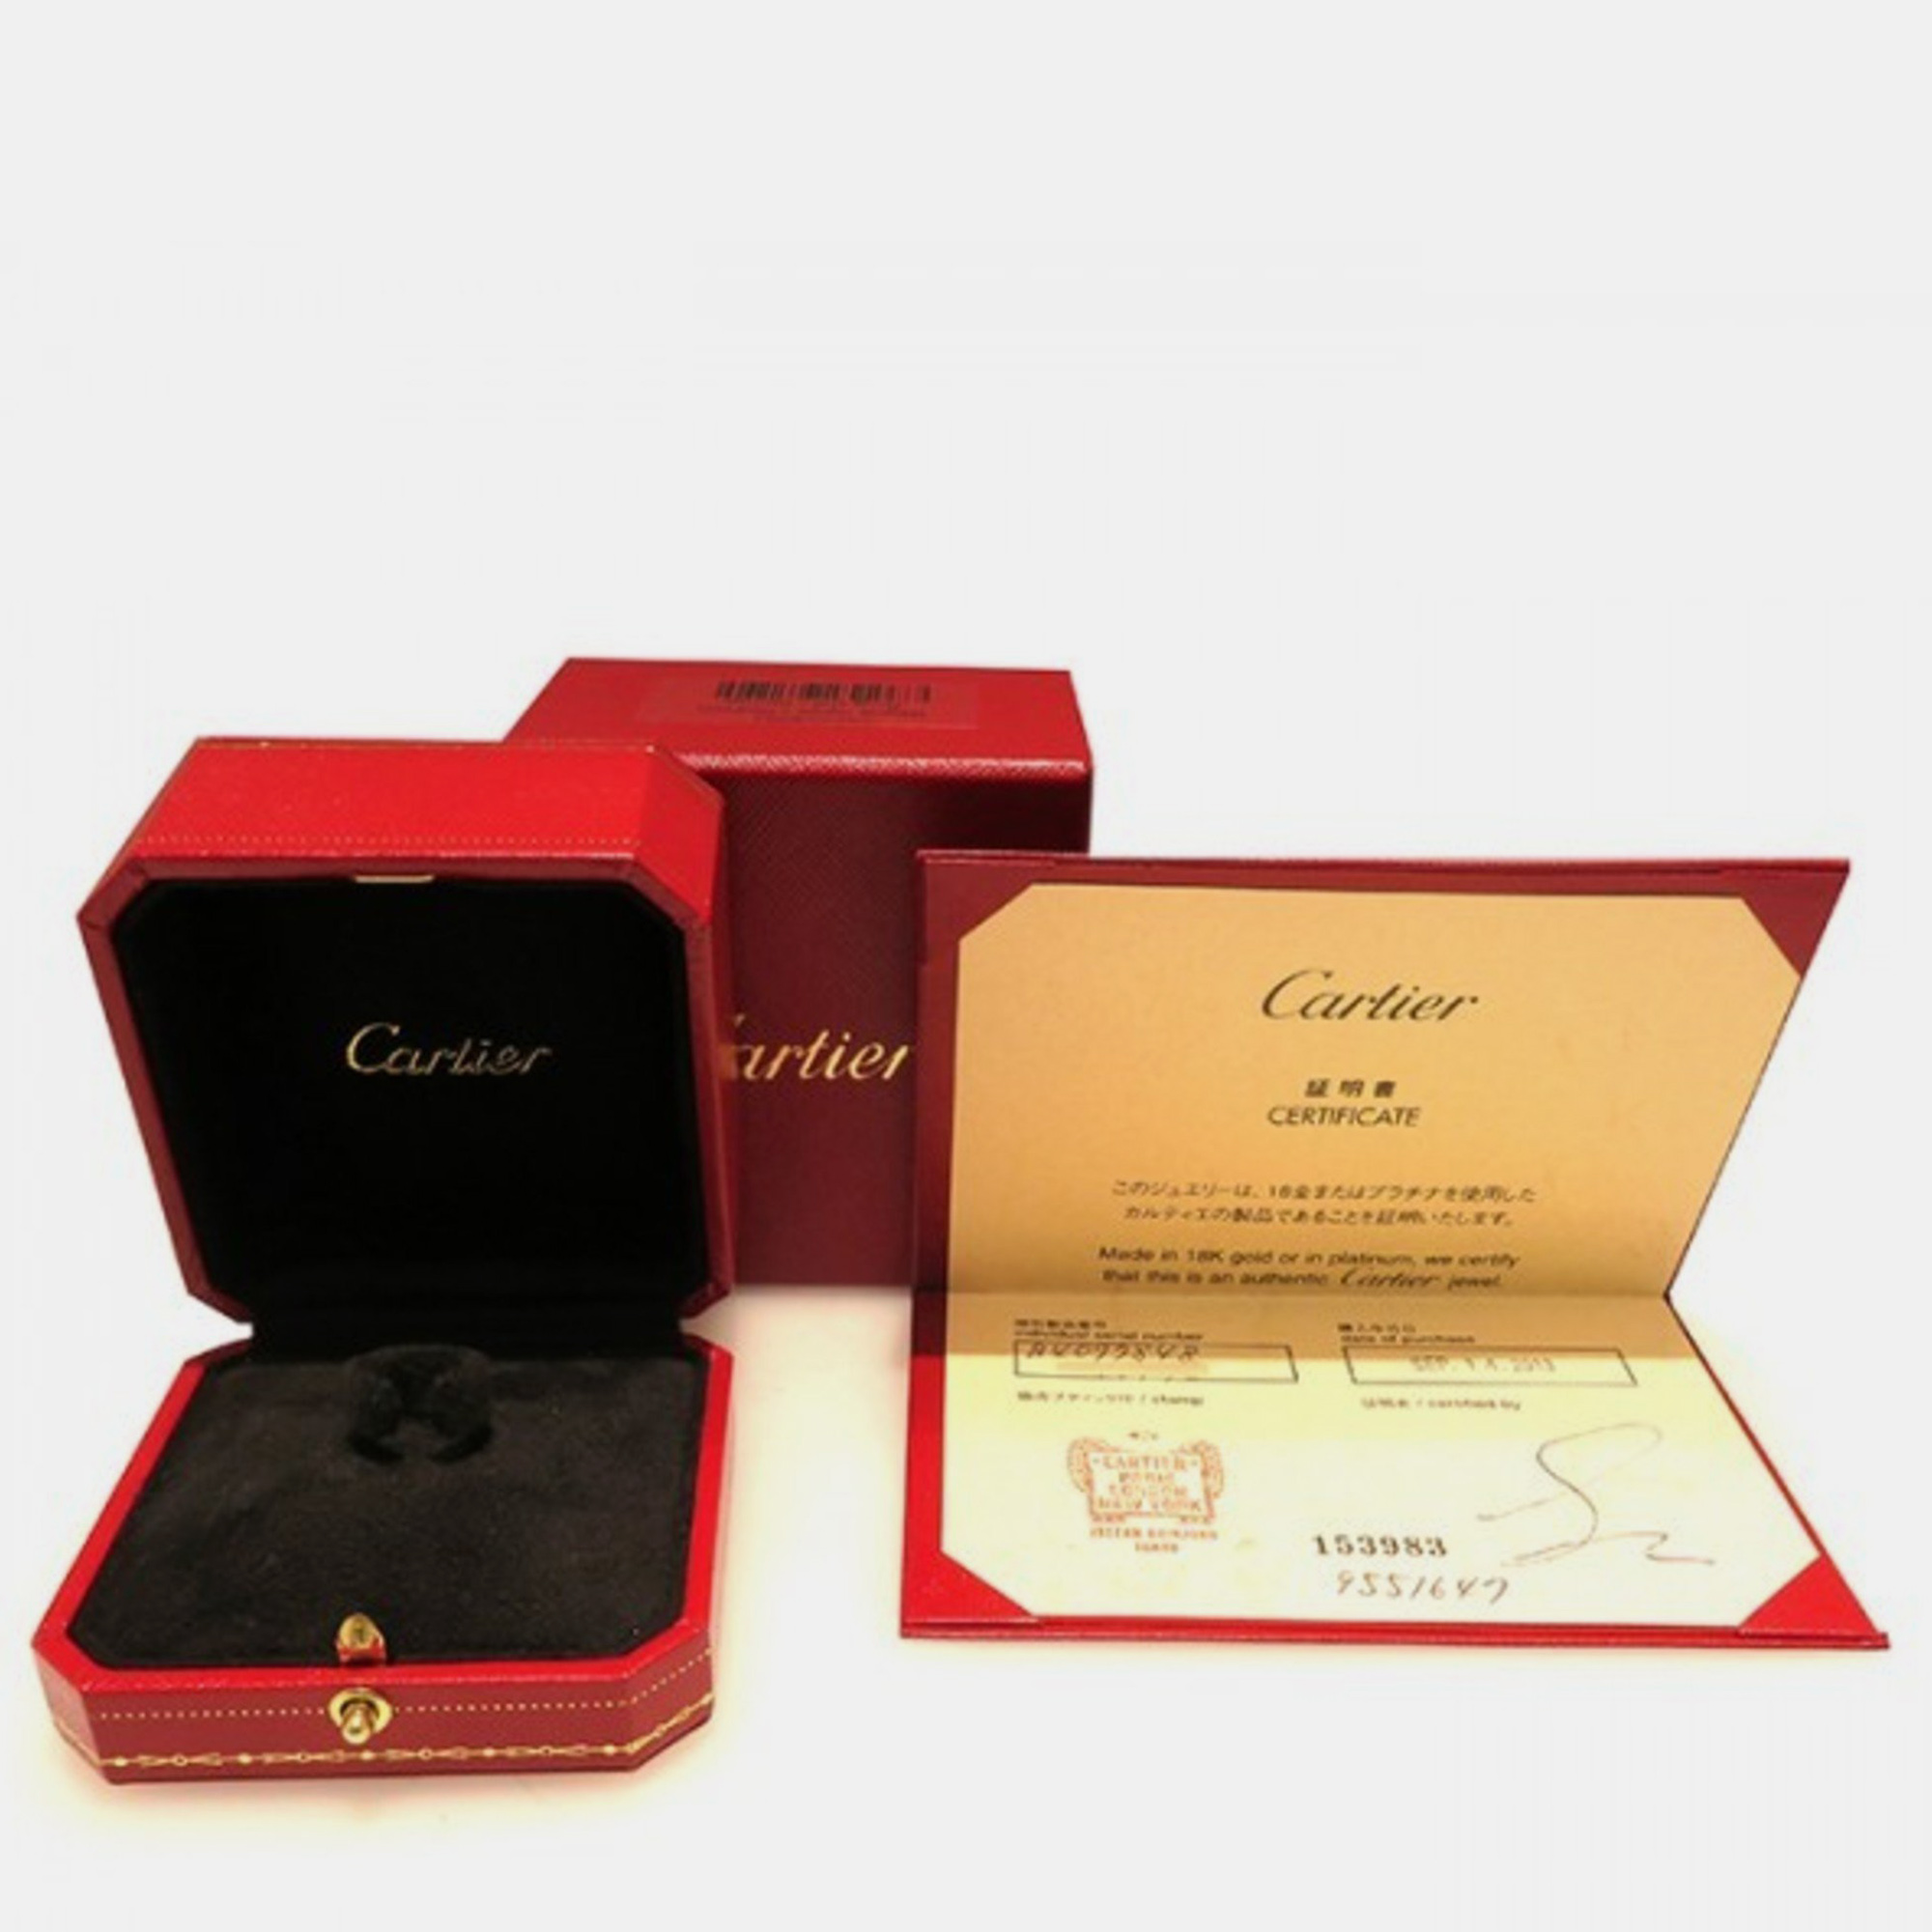 Cartier Love Three Hoop 18K White Gold Diamond And Ceramic Ring EU 48